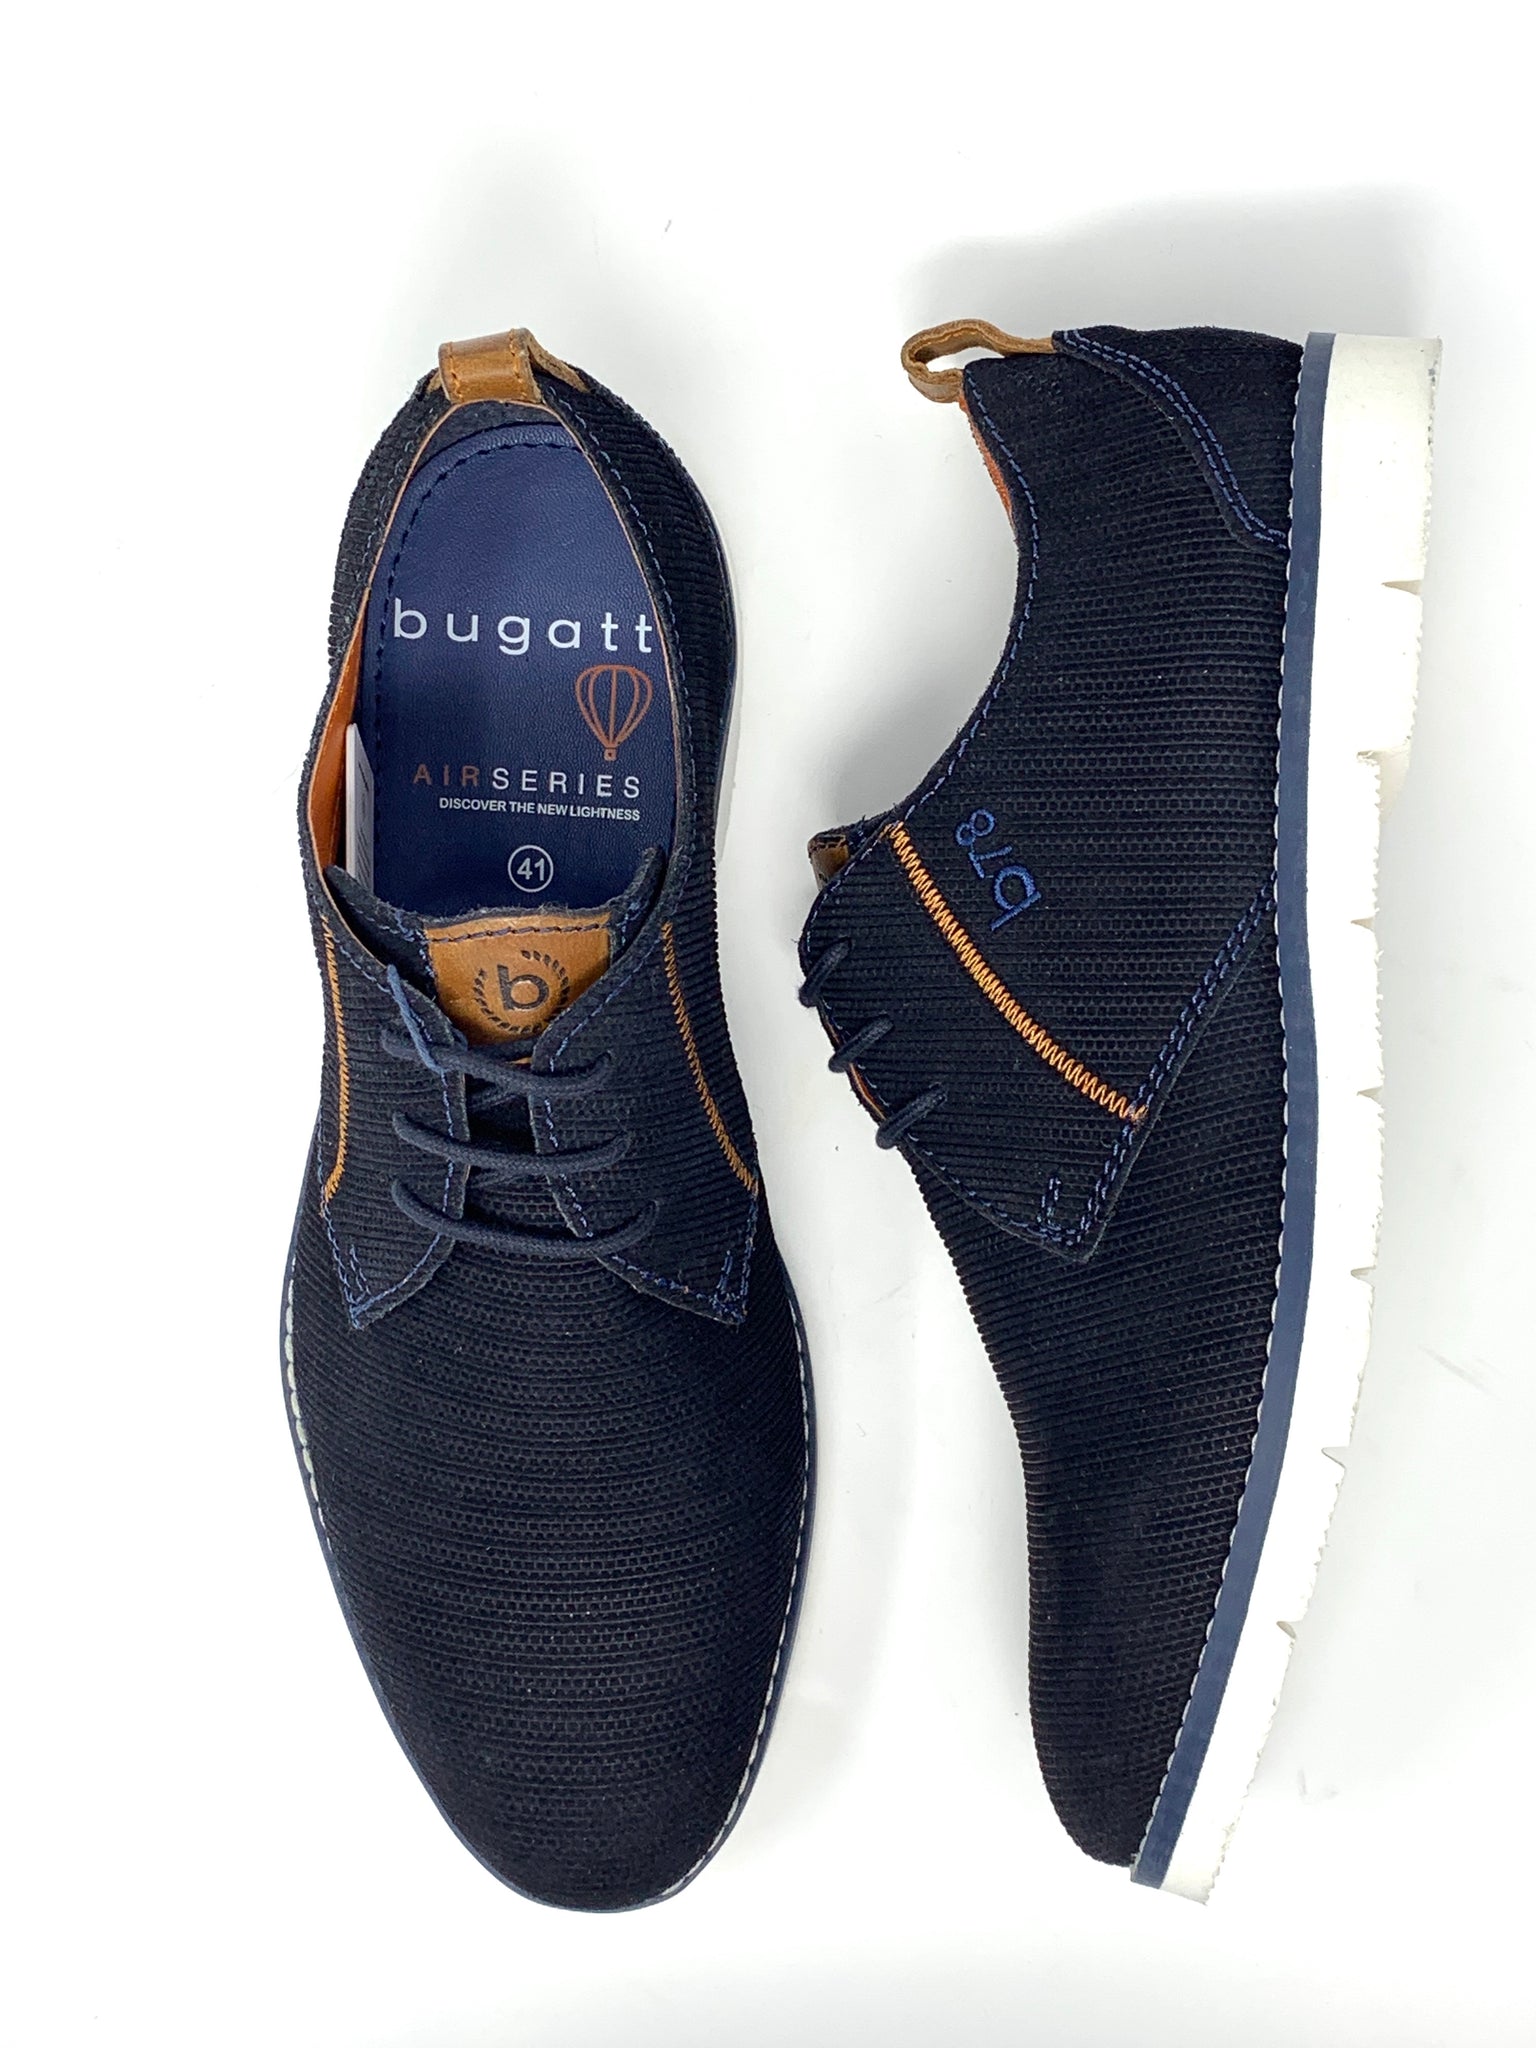 bugatti blue suede shoes